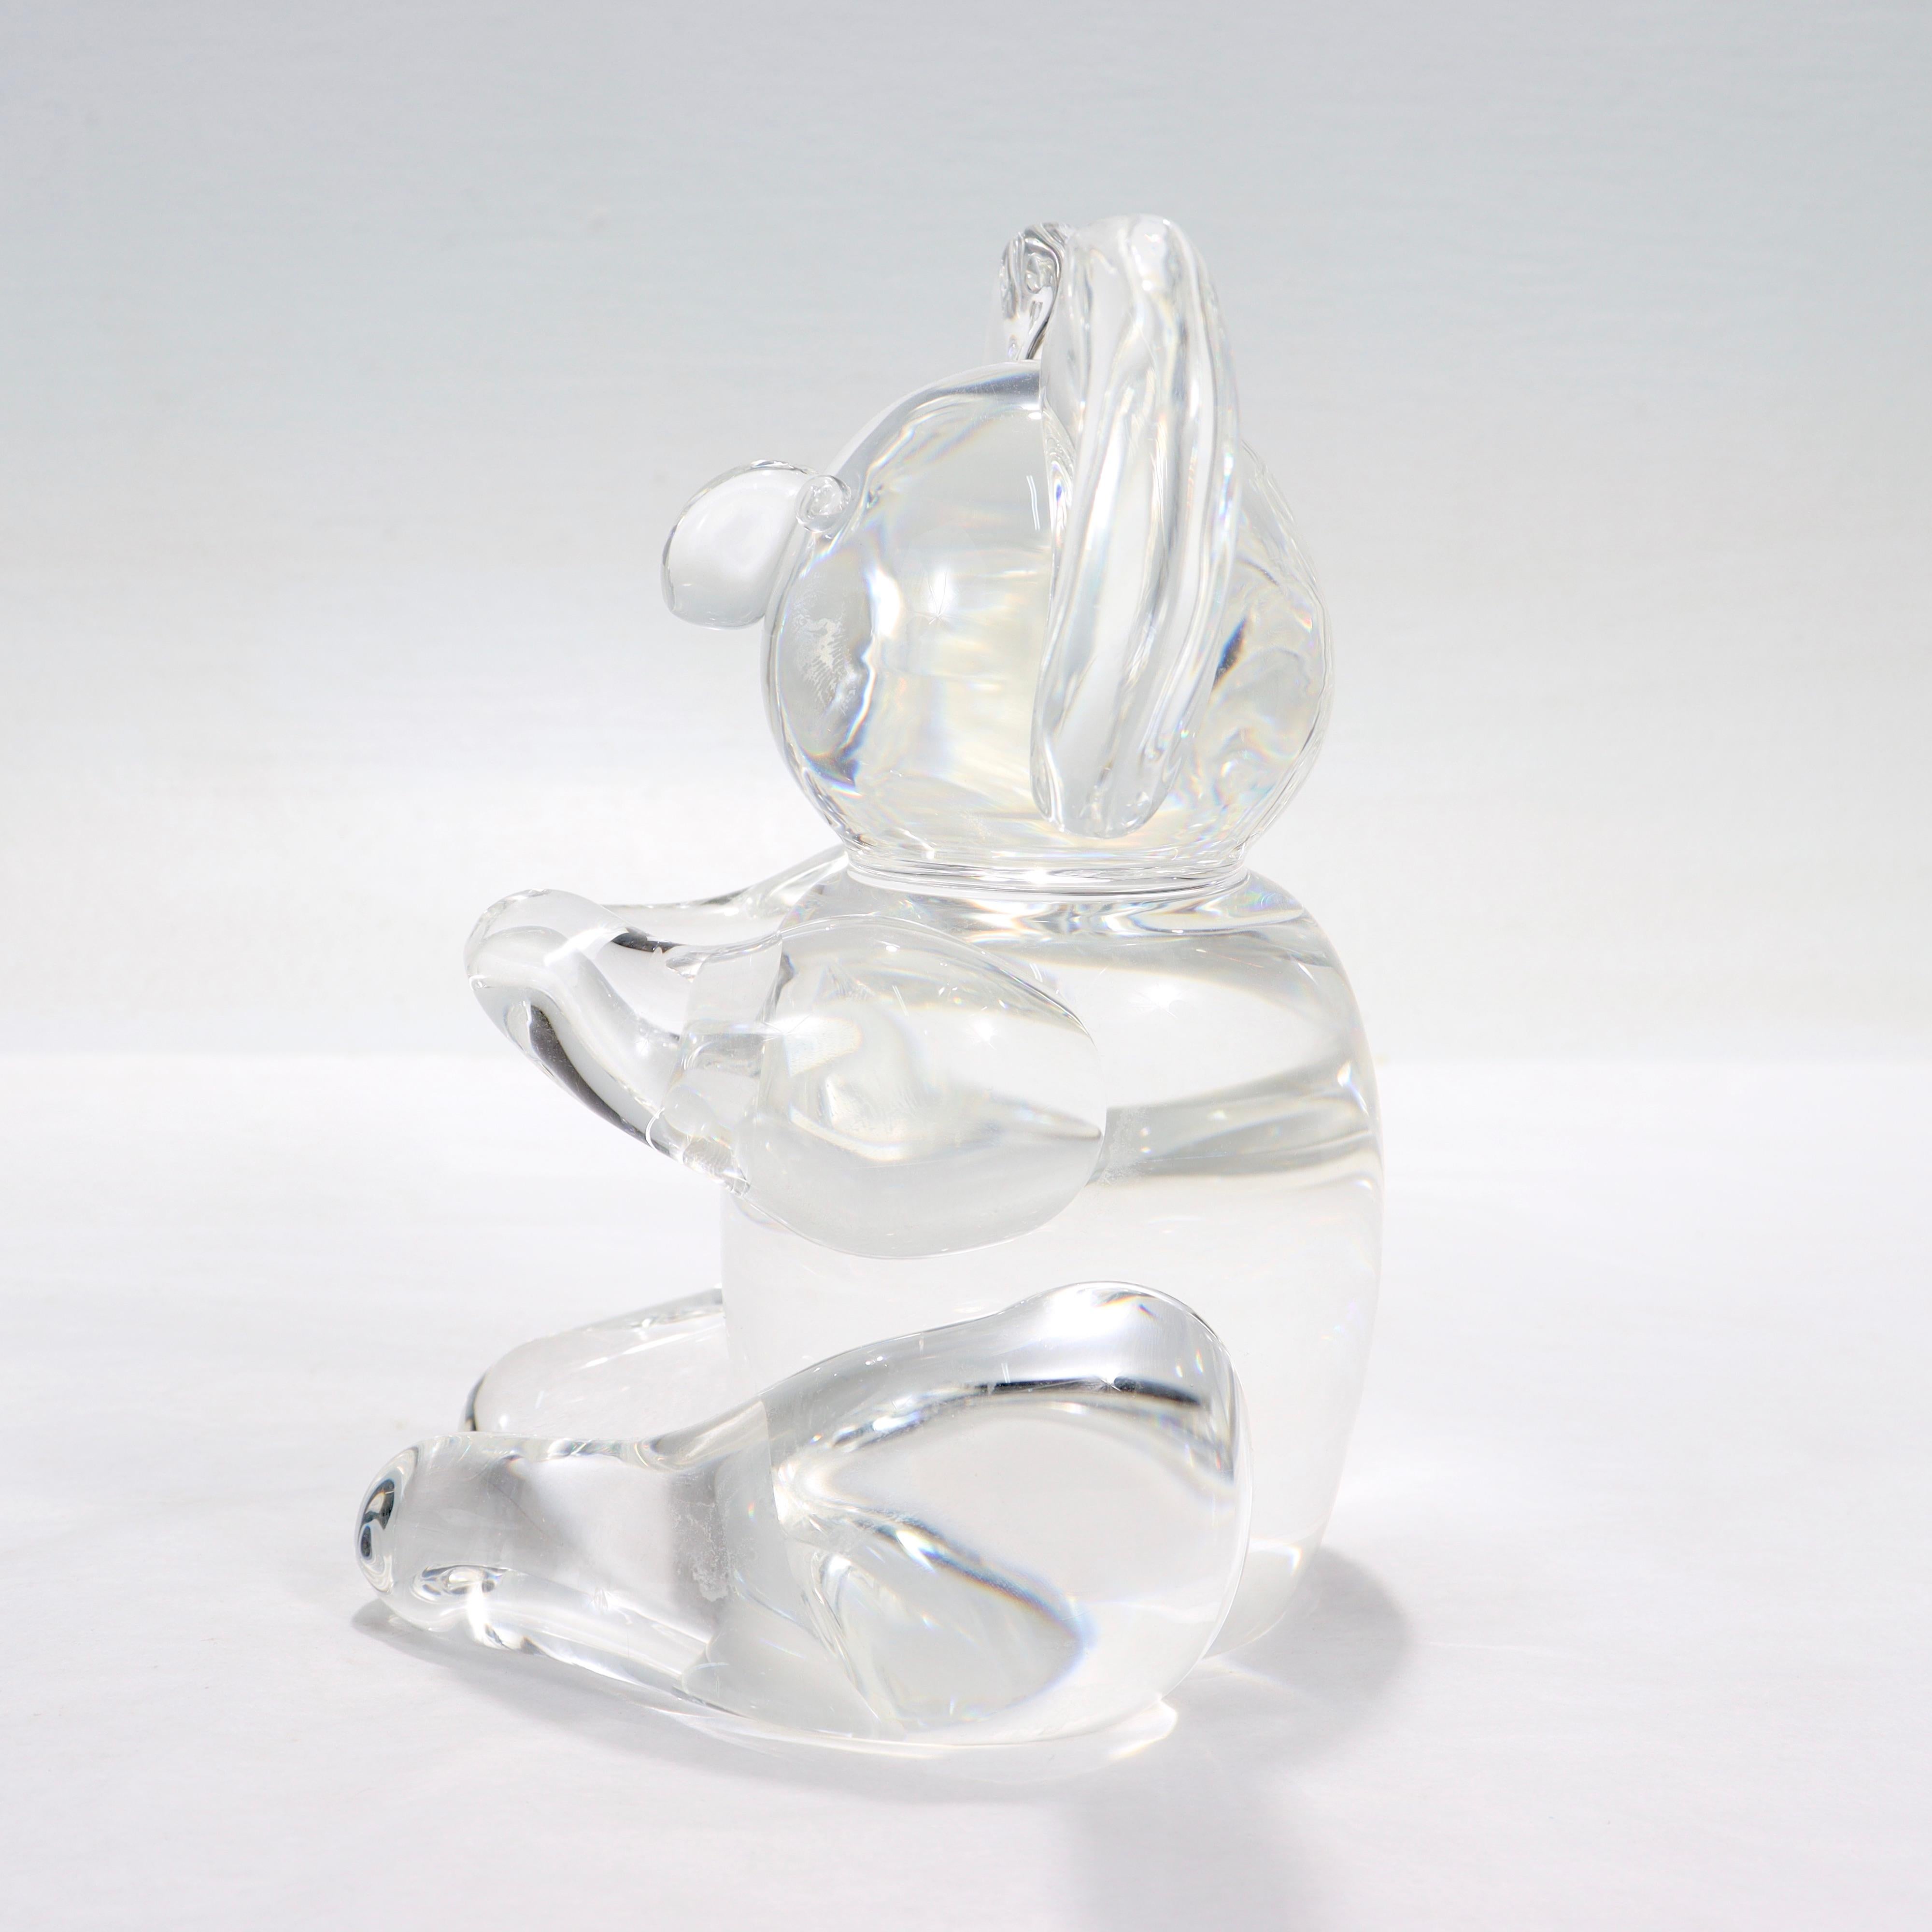 Art Glass Steuben Koala Bear Figurine or Sculpture Model No. 8268 by Lloyd Atkins 1971 For Sale